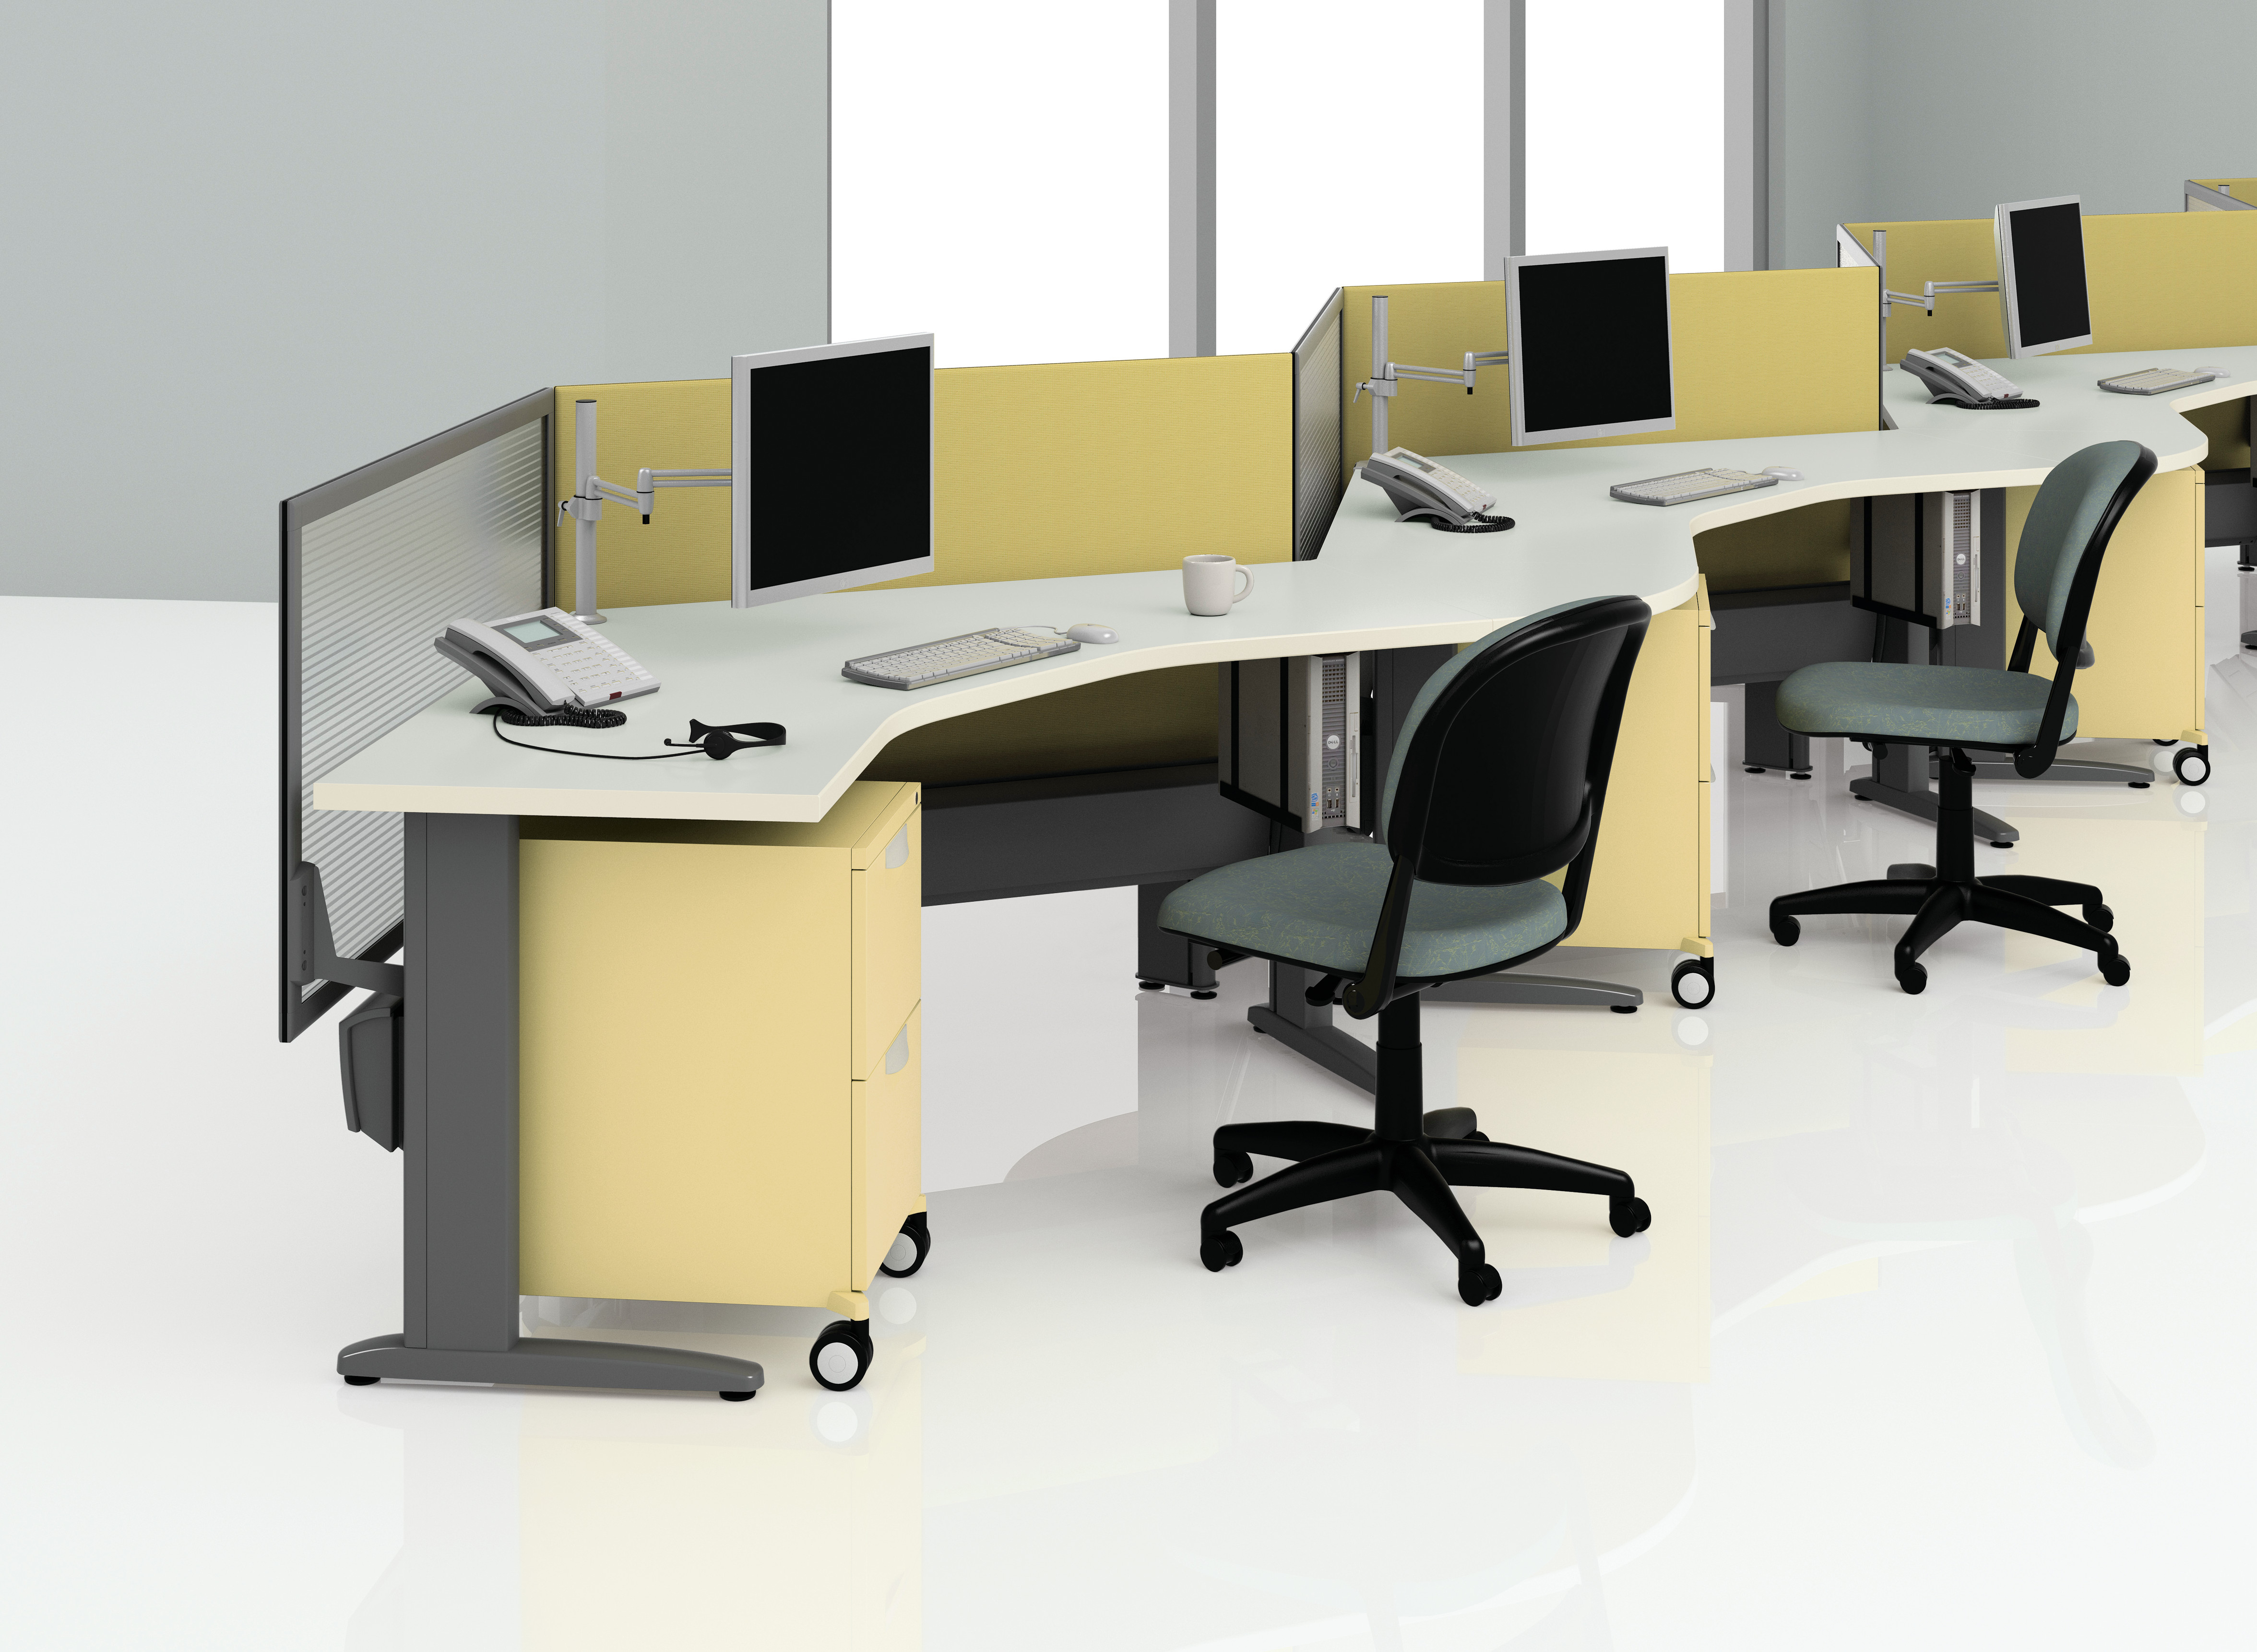 KI Desk and Chairs